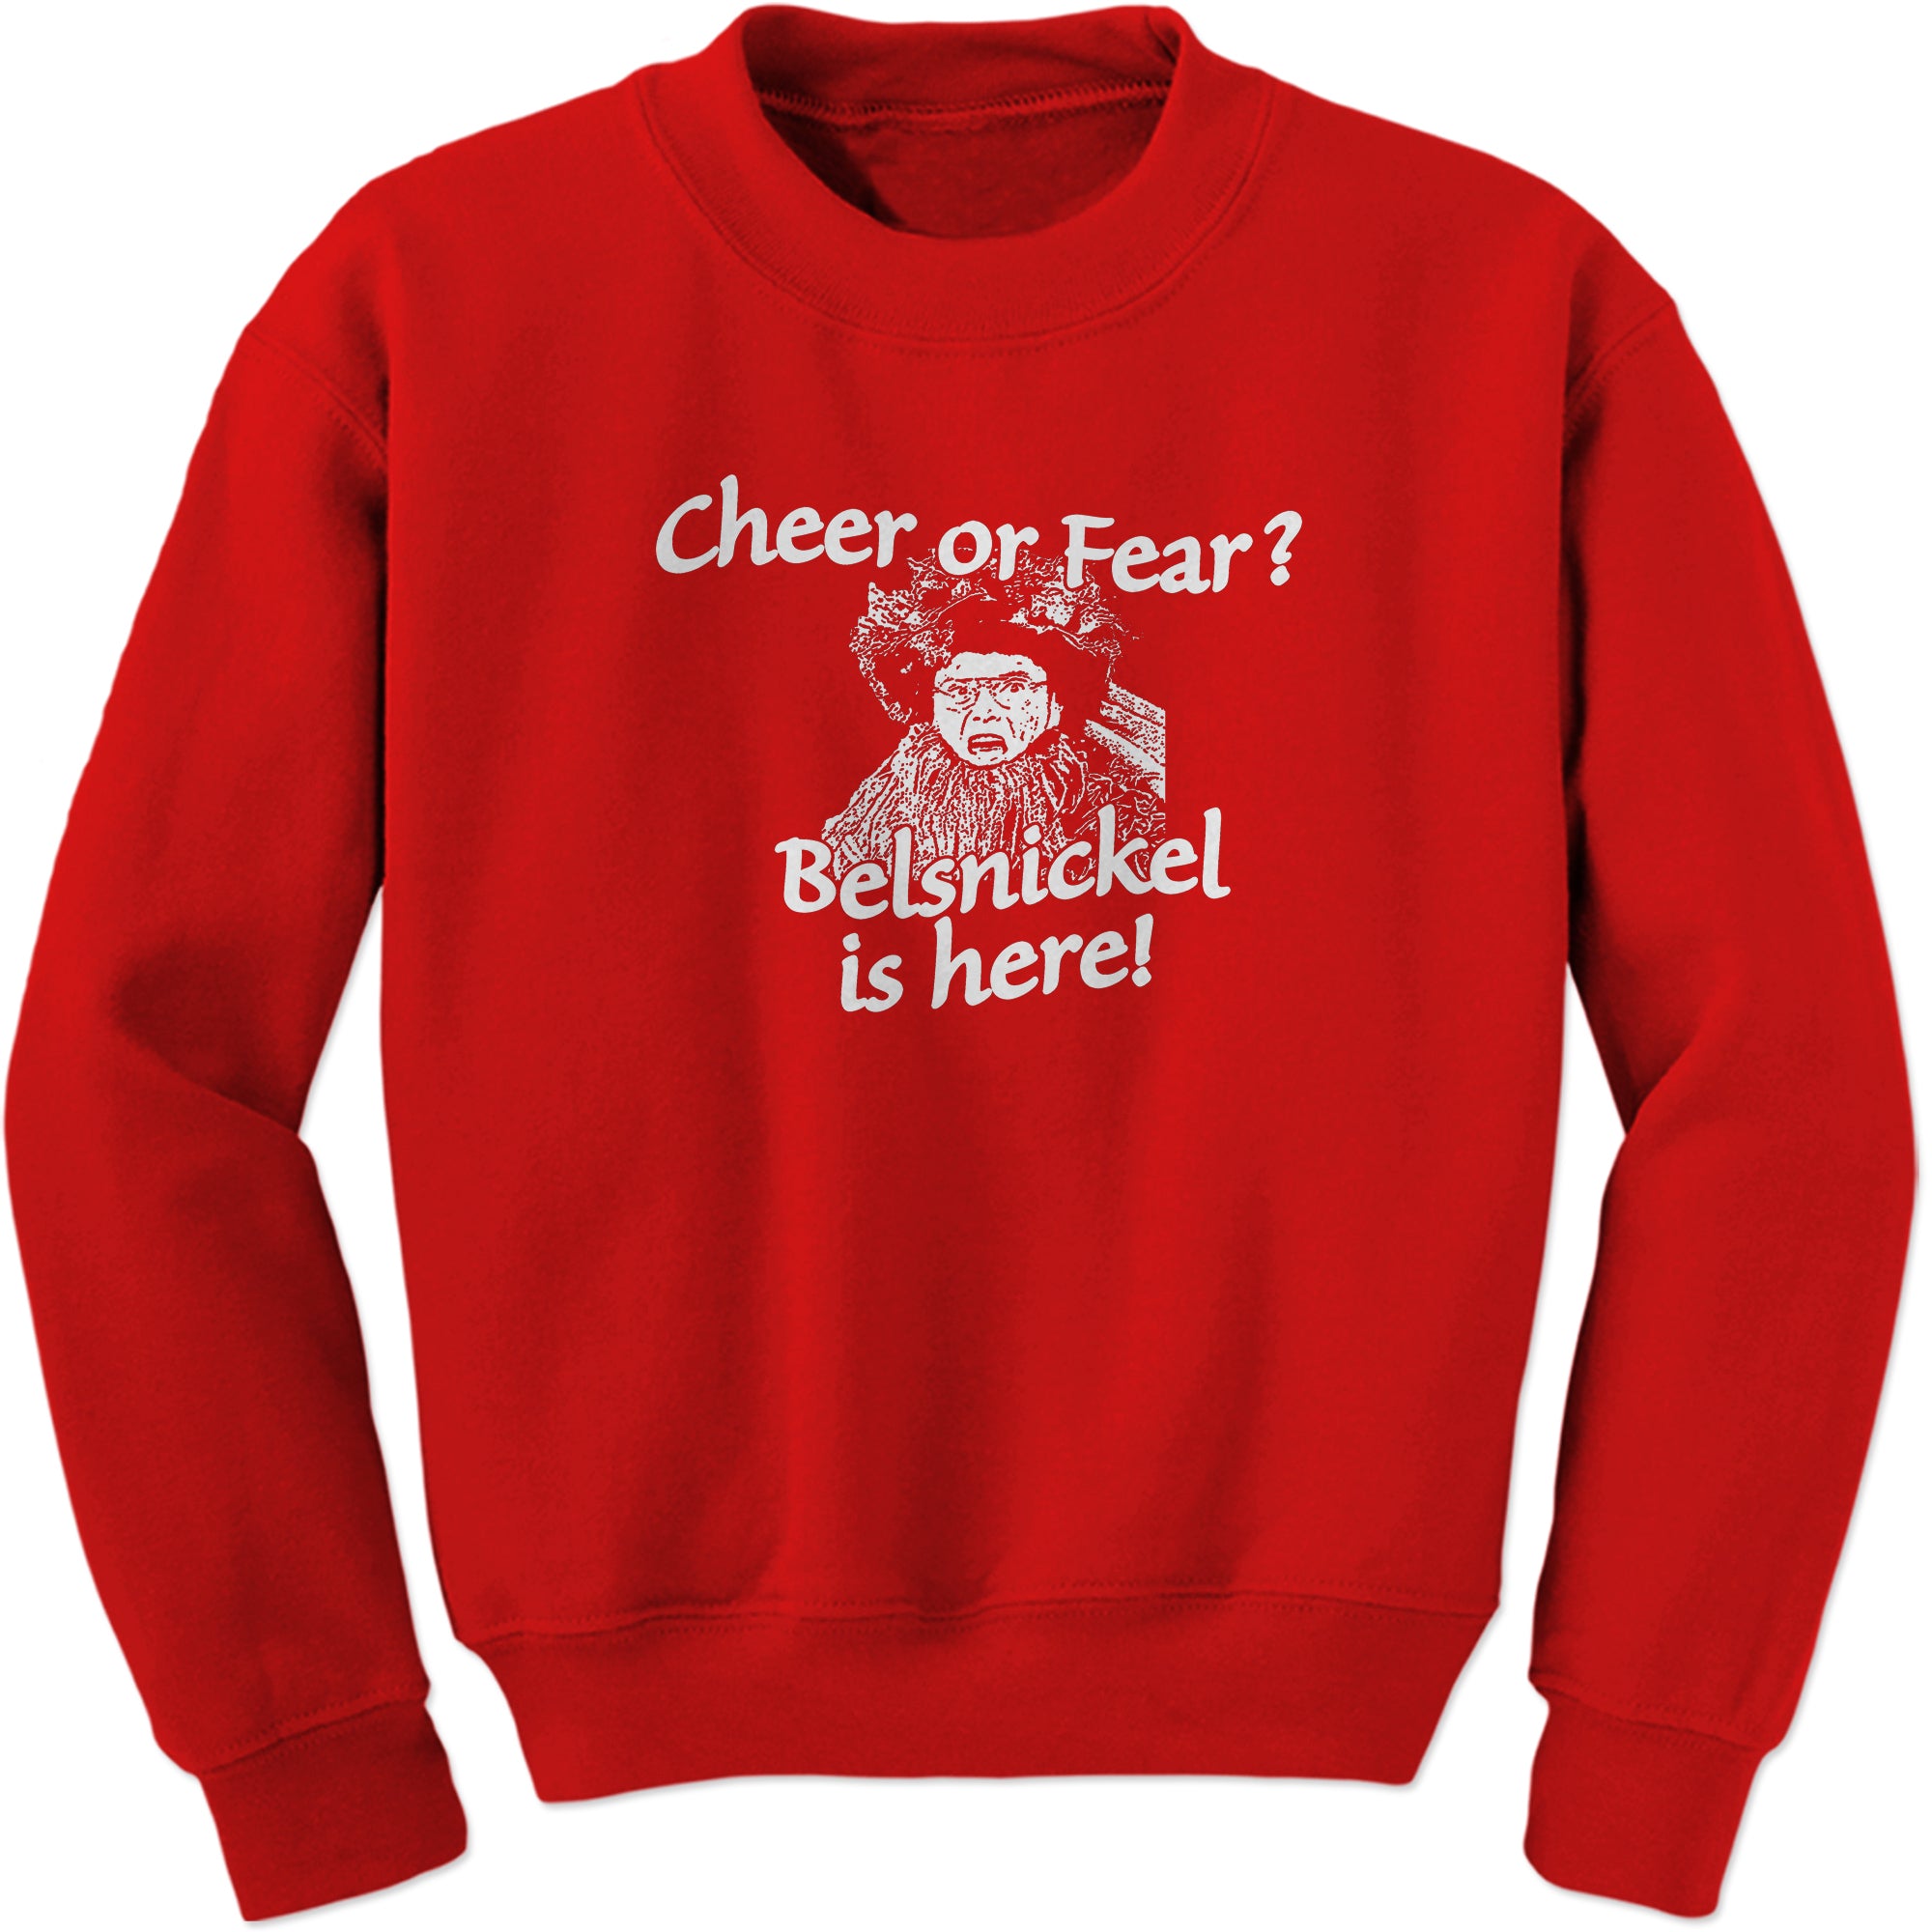 Belsnickel Cheer or Fear Sweatshirt